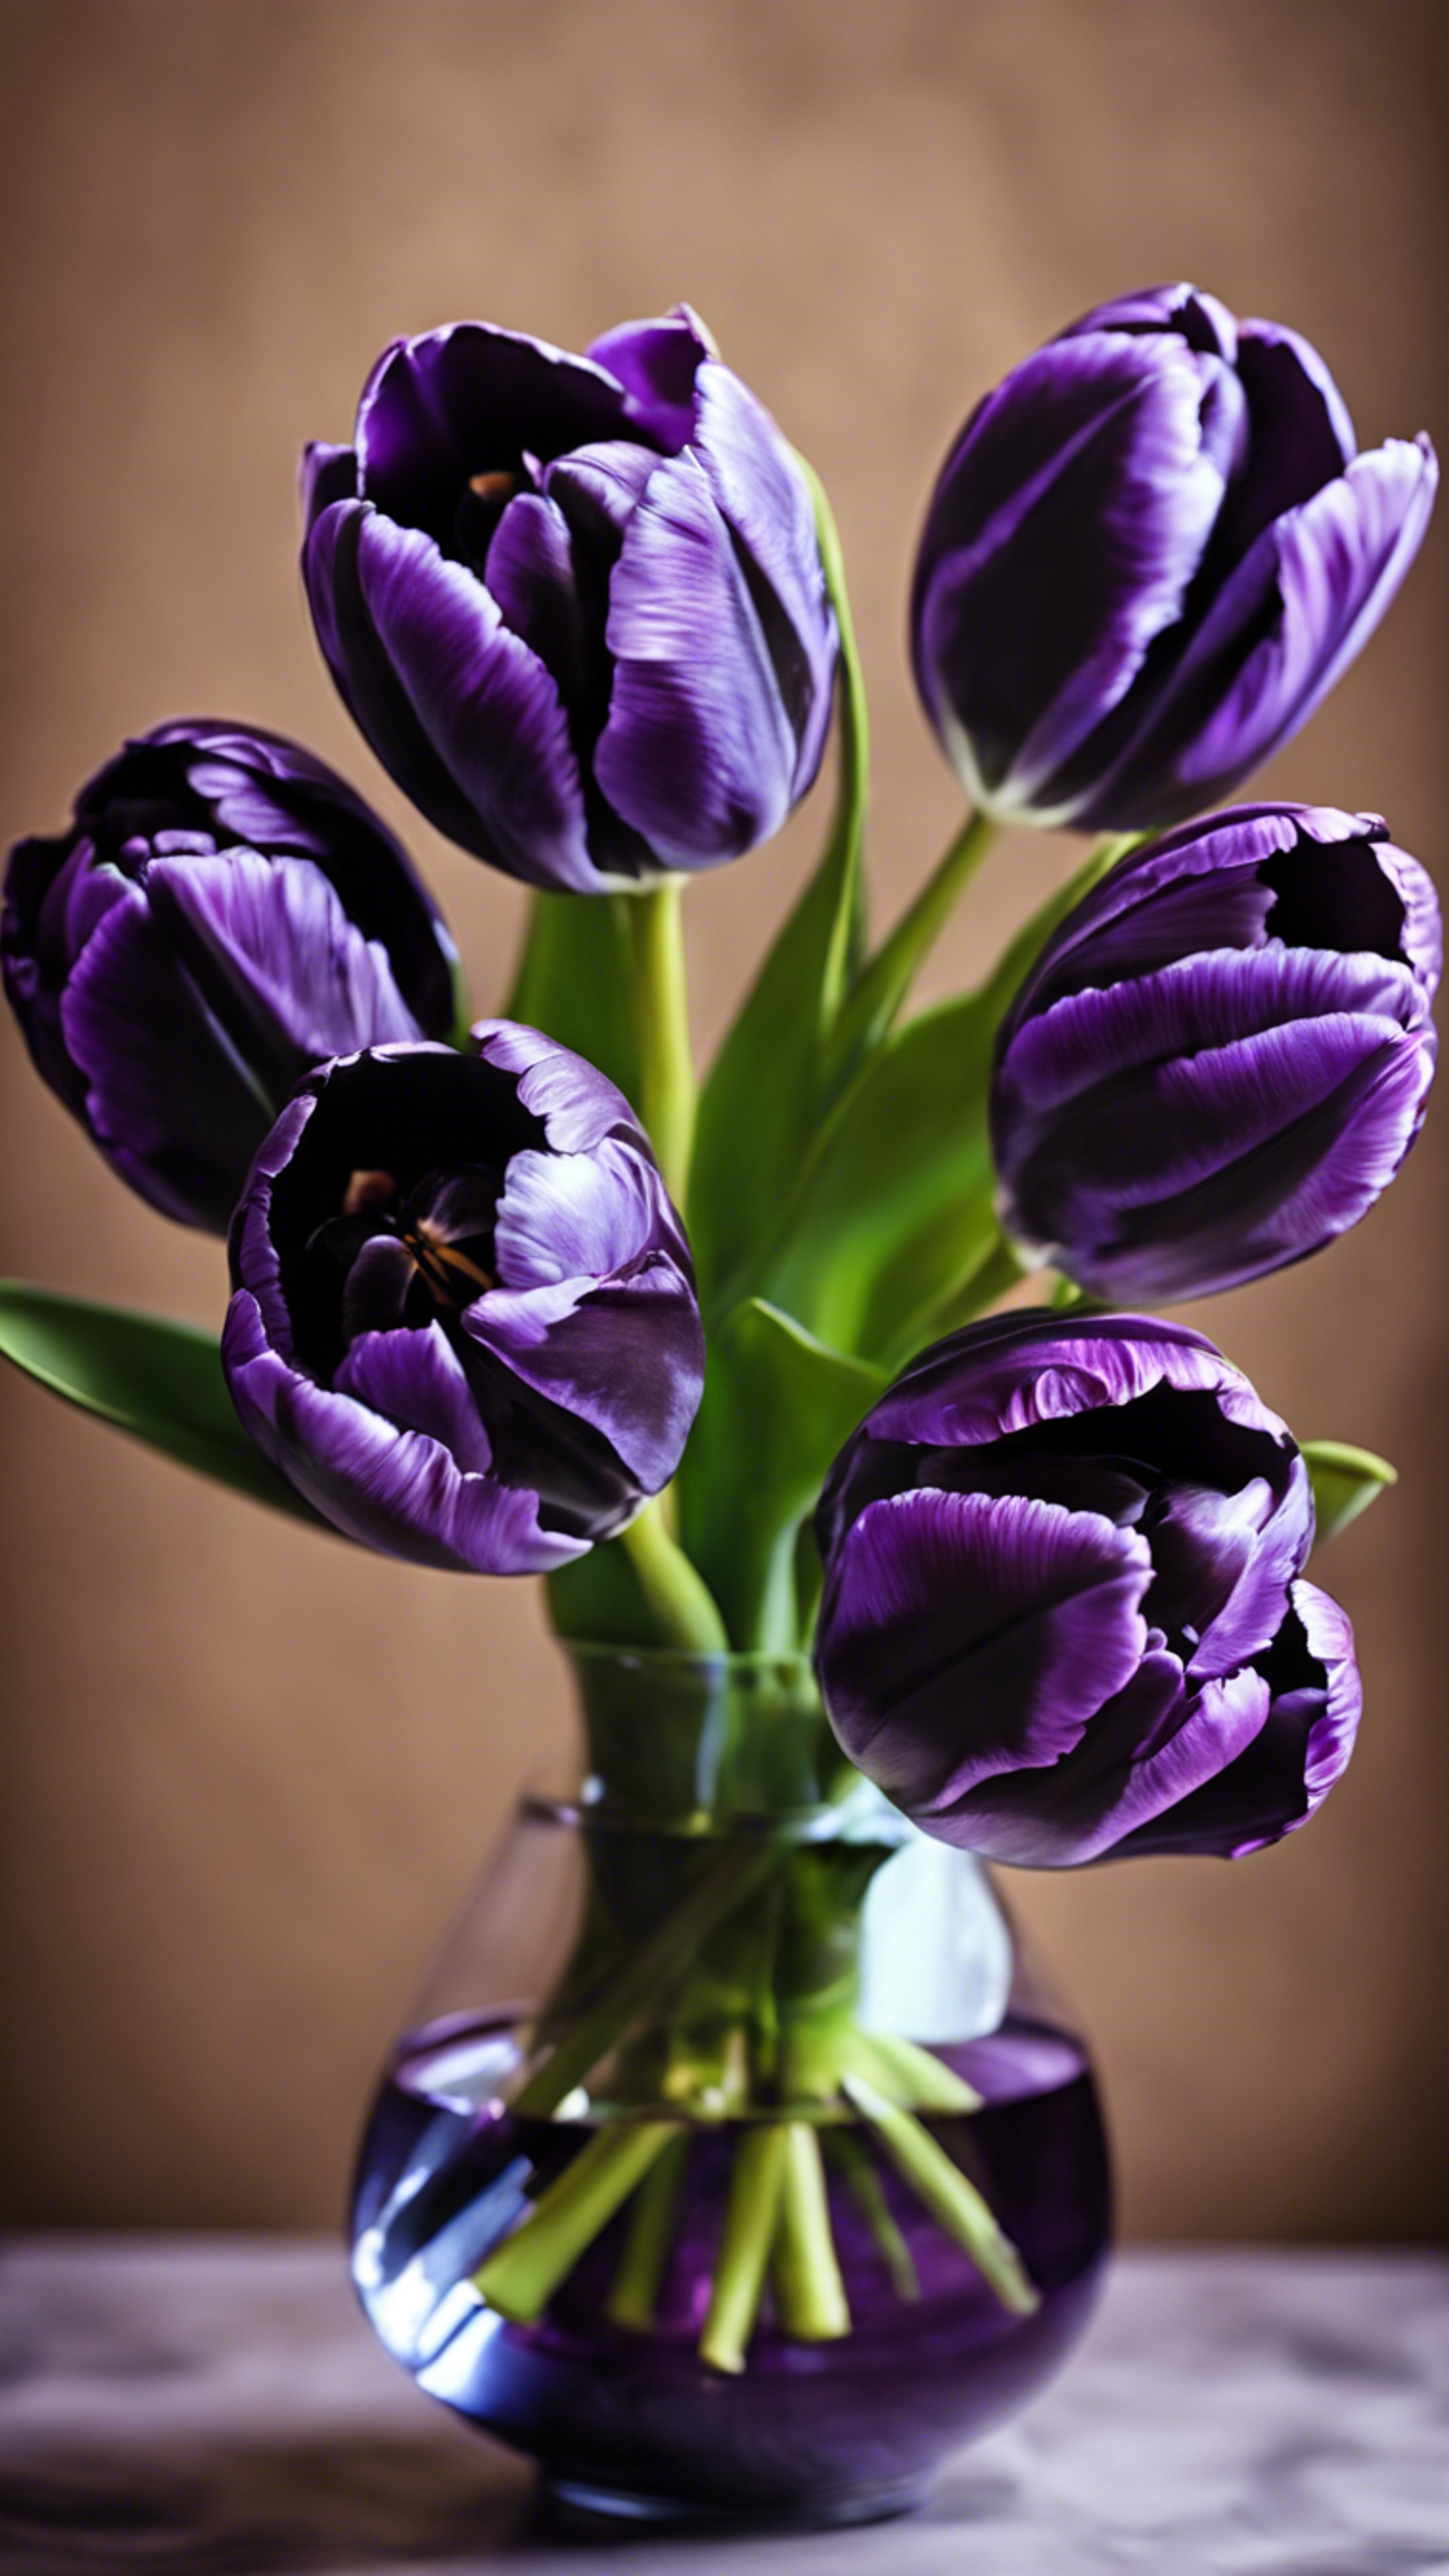 Black tulips with purple edges in full bloom in an elegant vase. 벽지[bf30bf151b944cb69afa]